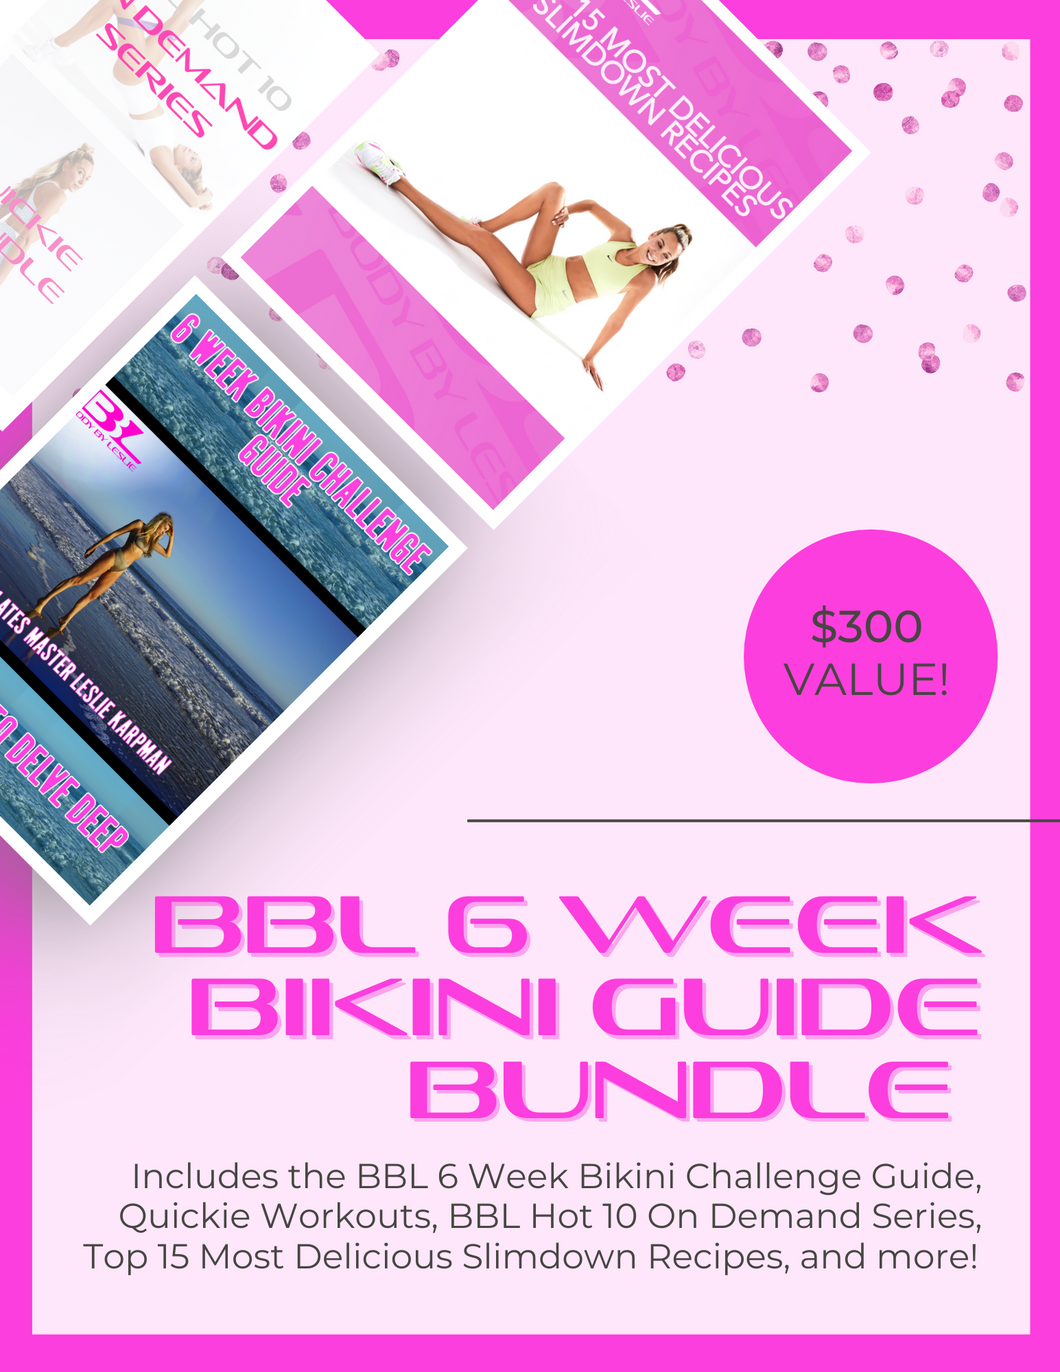 BBL 6 Week Bikini Guide Bundle Upgrade